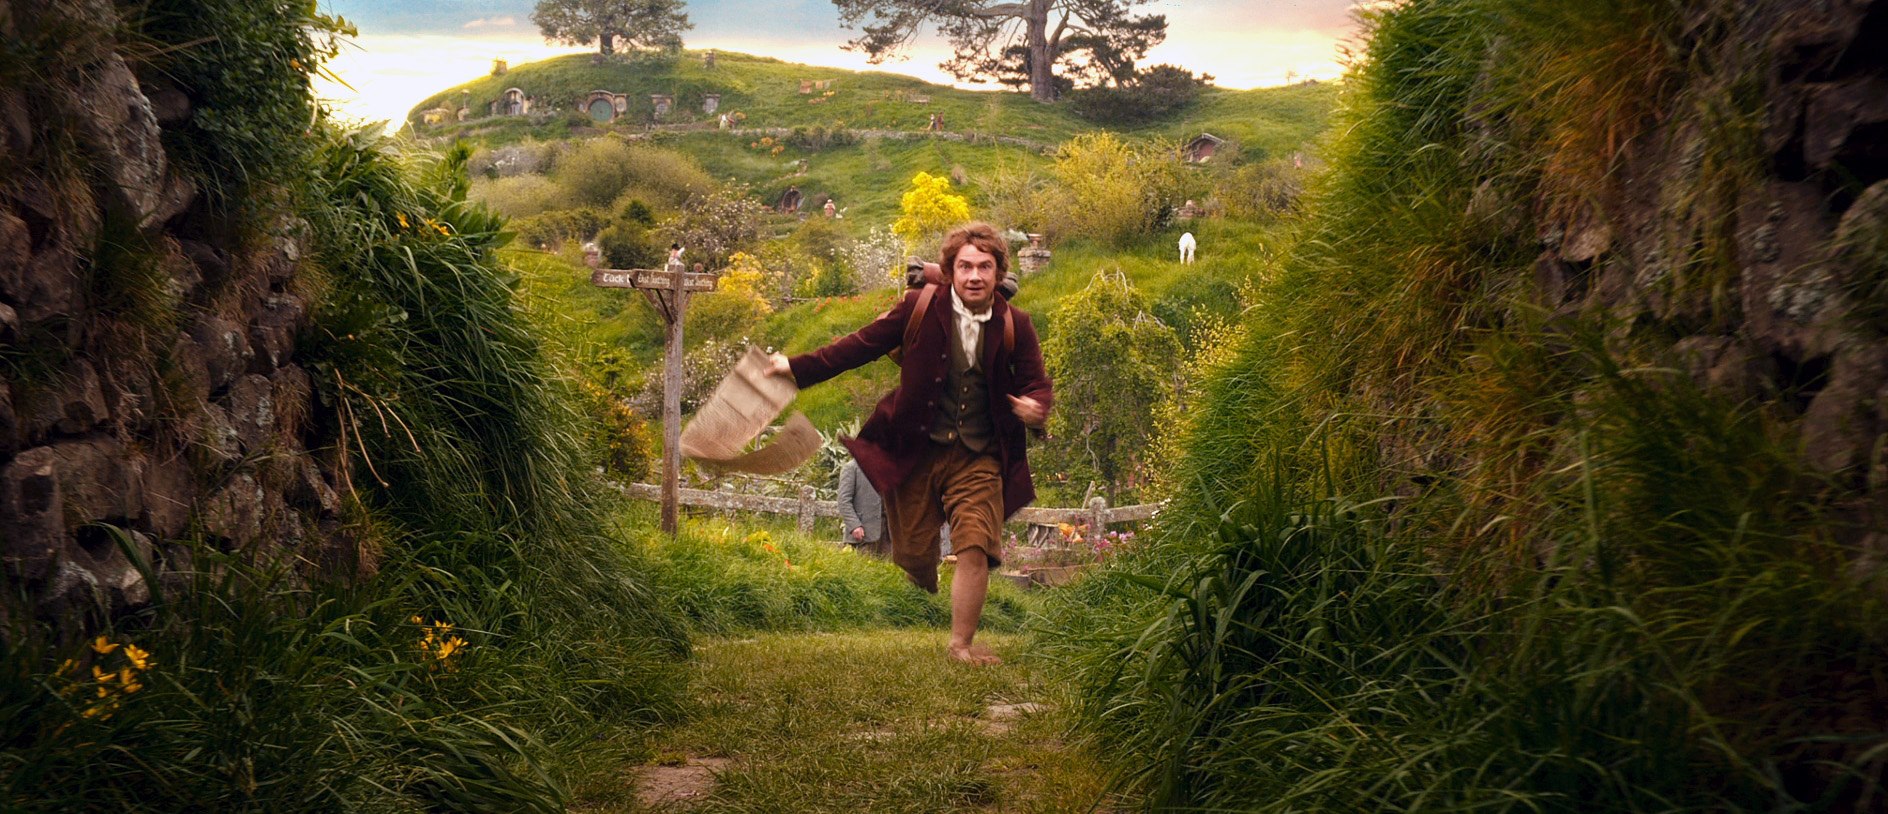 Martin-Freeman-in-The-Hobbit-An-Unexpected-Journey